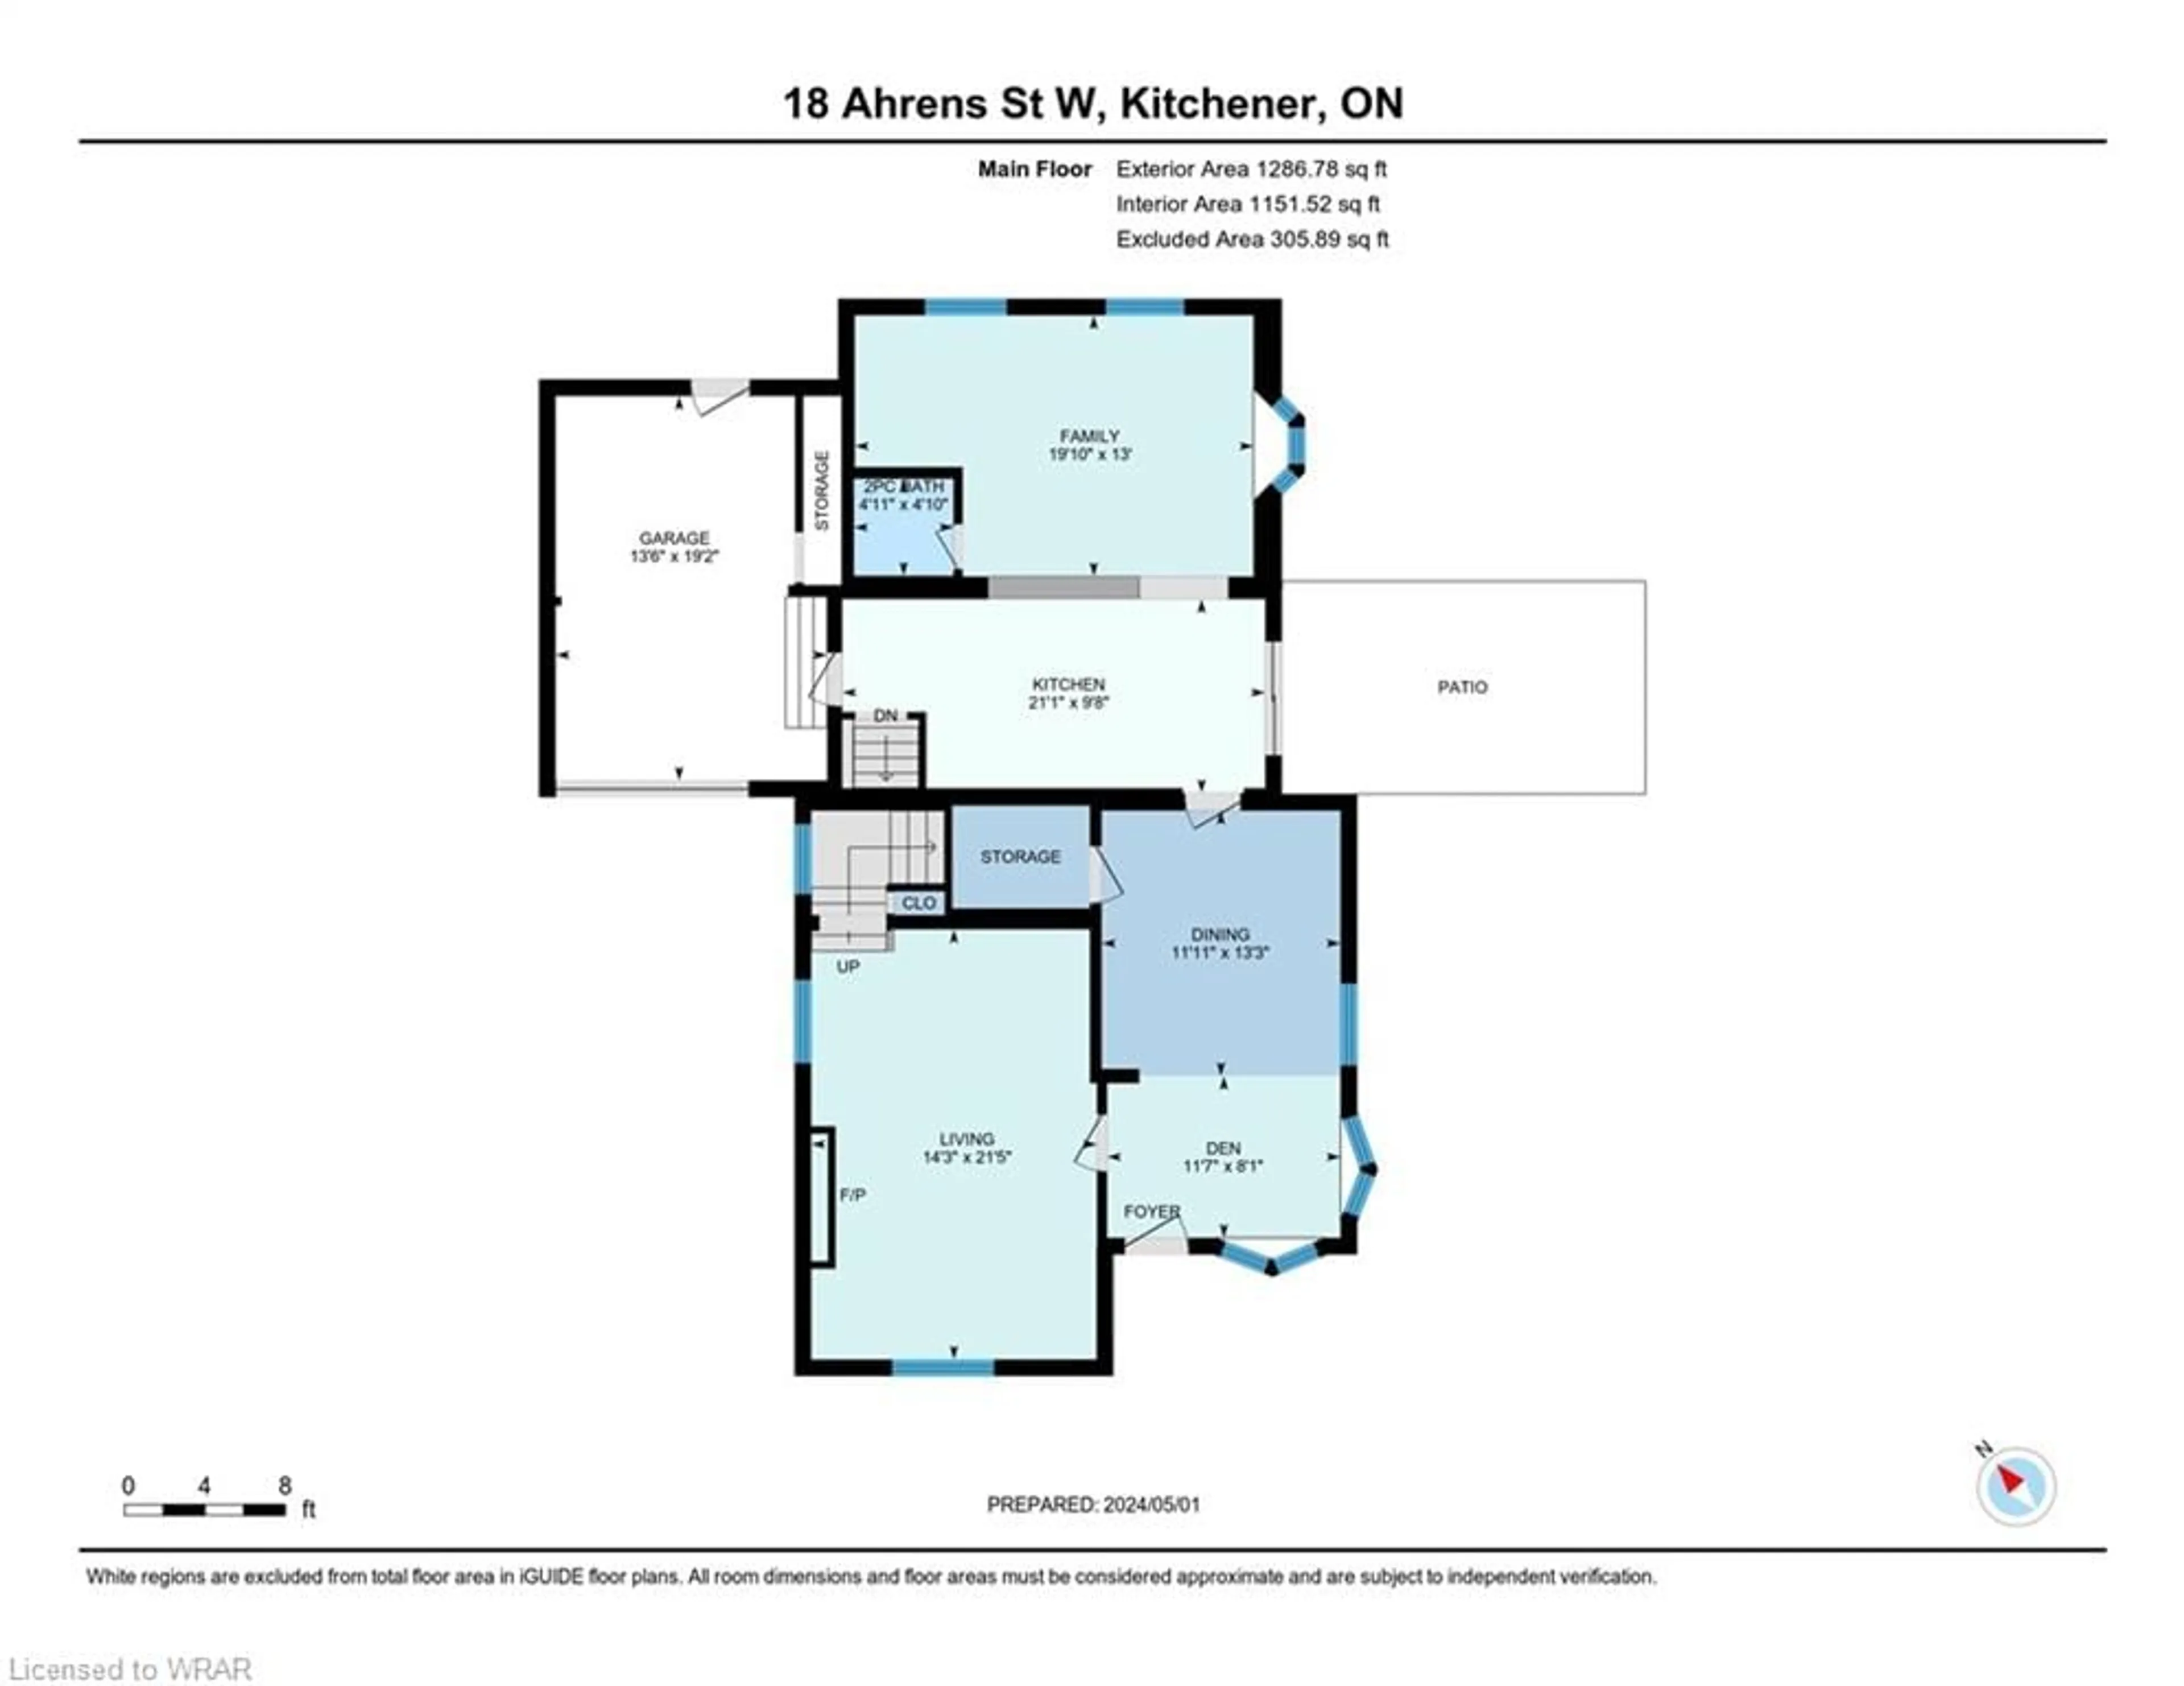 Floor plan for 18 Ahrens St, Kitchener Ontario N2H 4B7